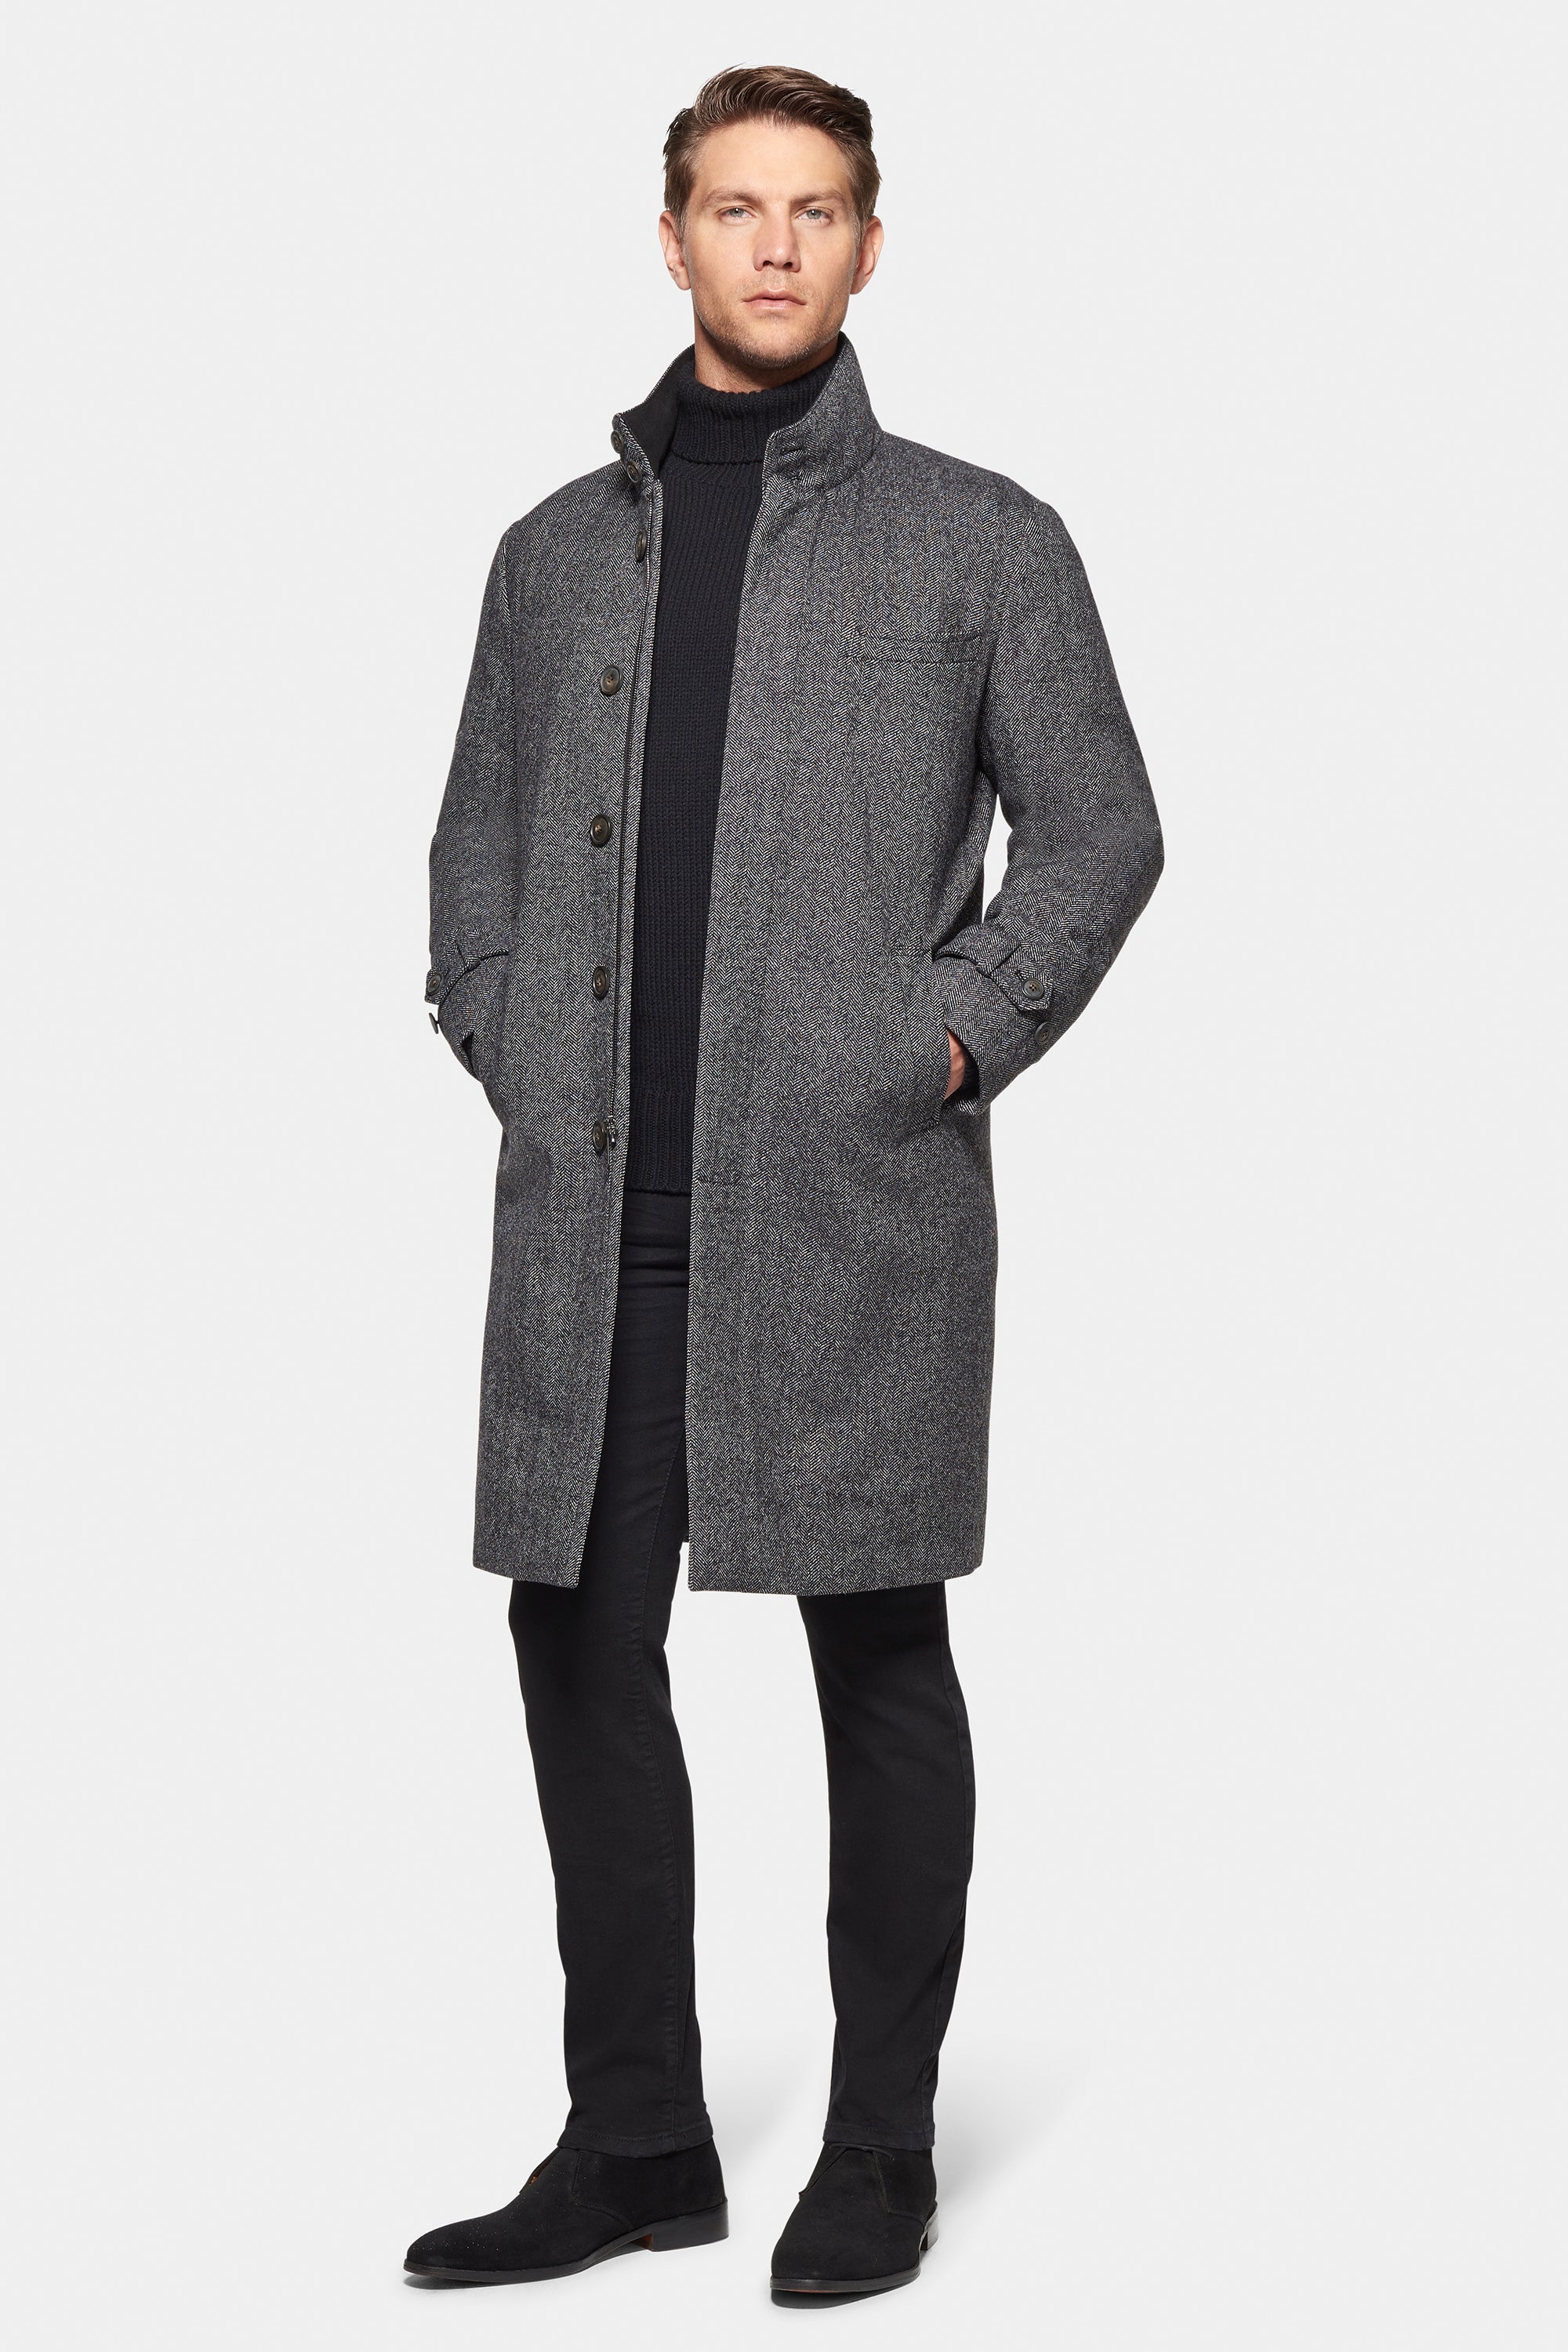 Wool Topcoat Black - M (US 40-42 / It 50-52)